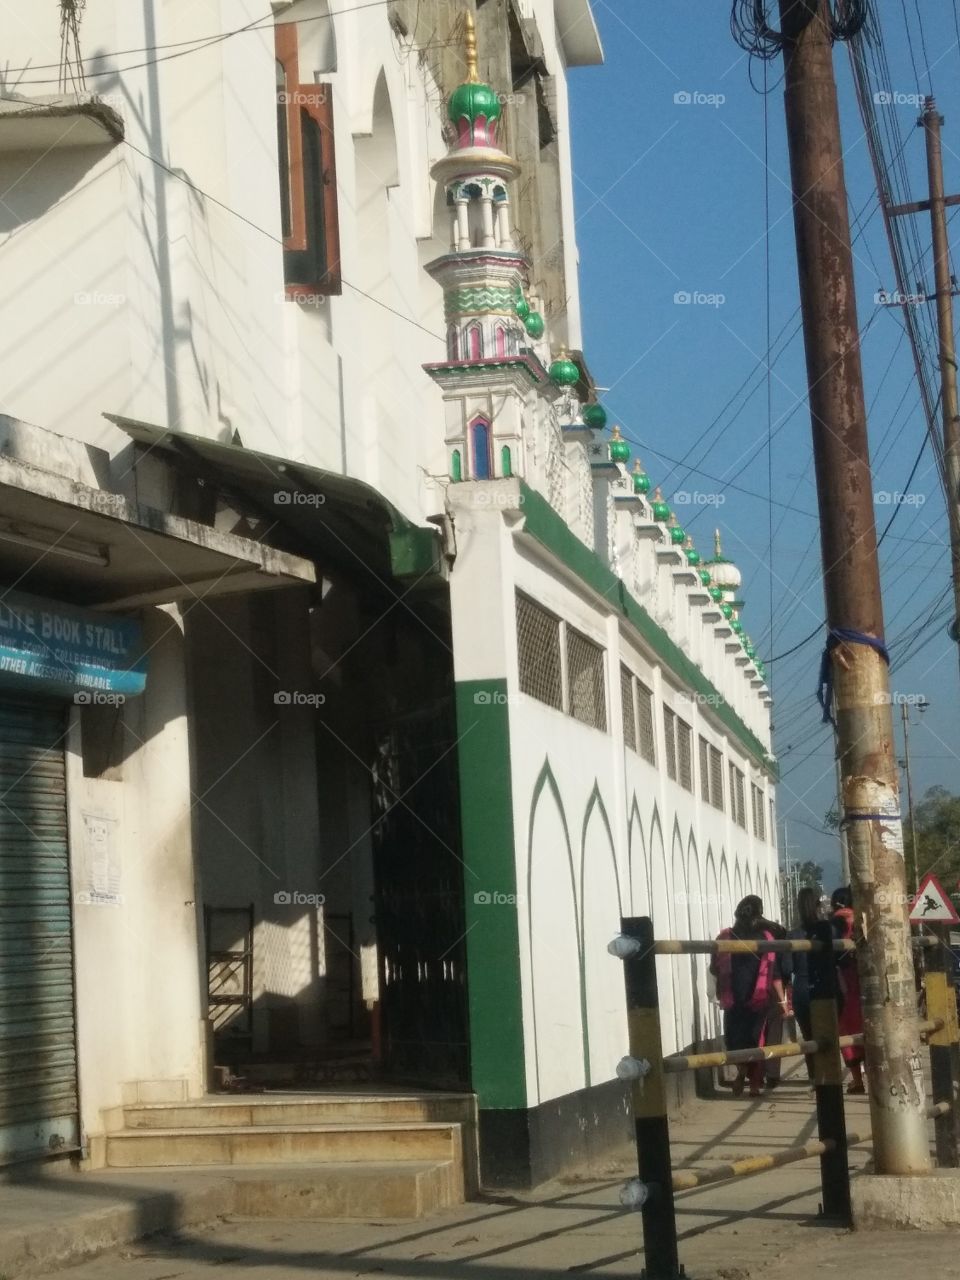 Masjid Architecture  in sidewall